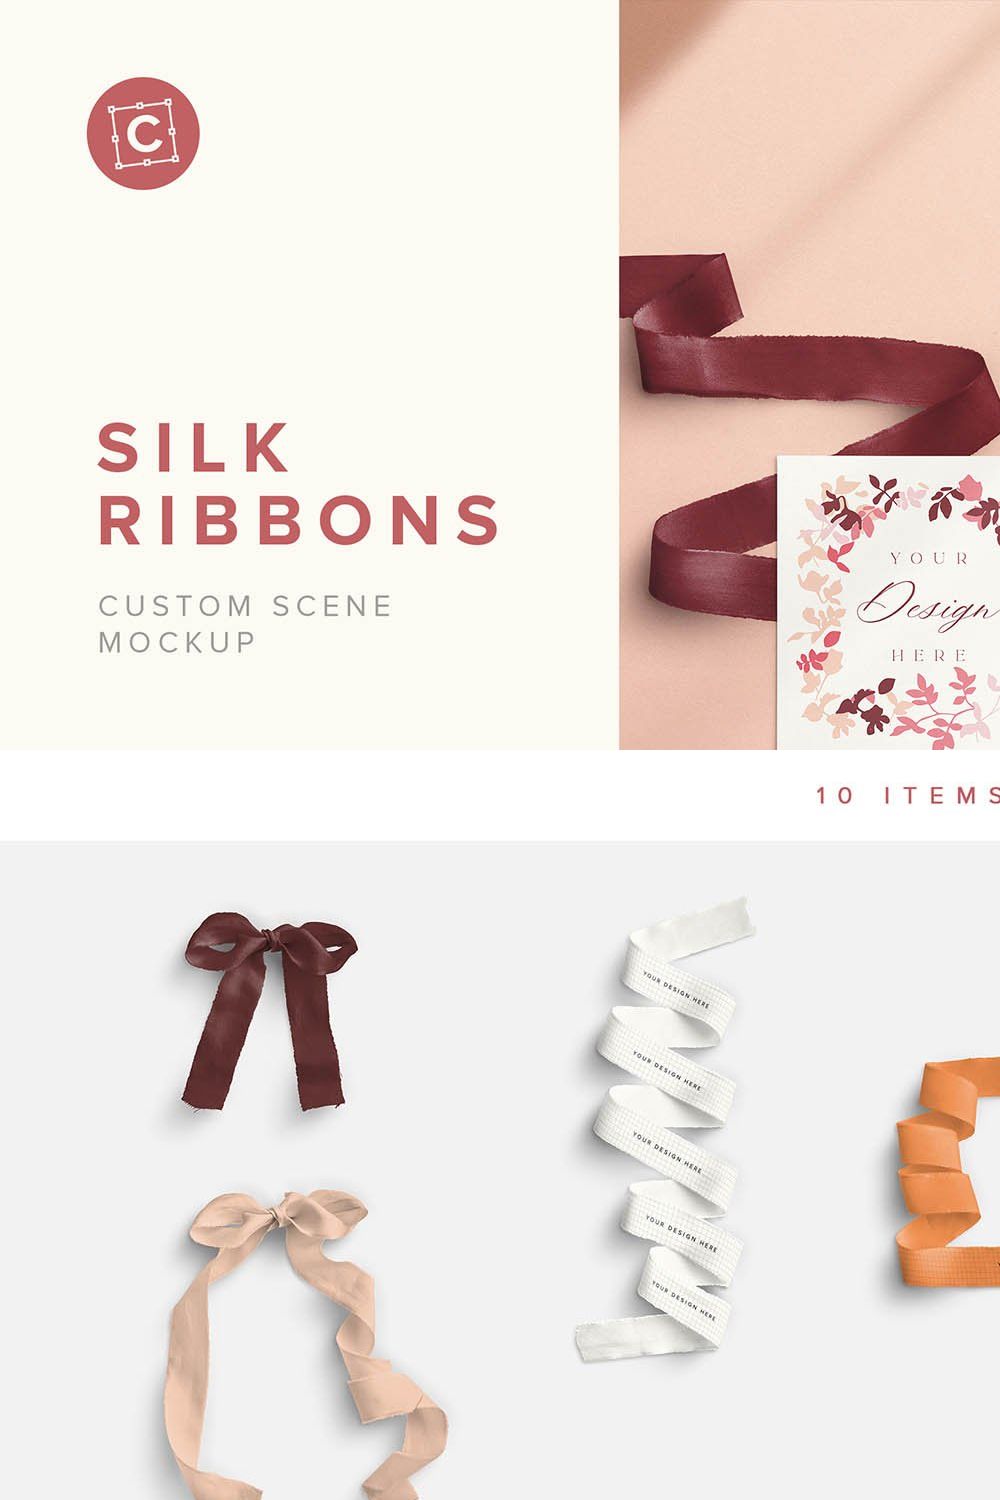 Silk Ribbons Custom Scene Creator pinterest preview image.